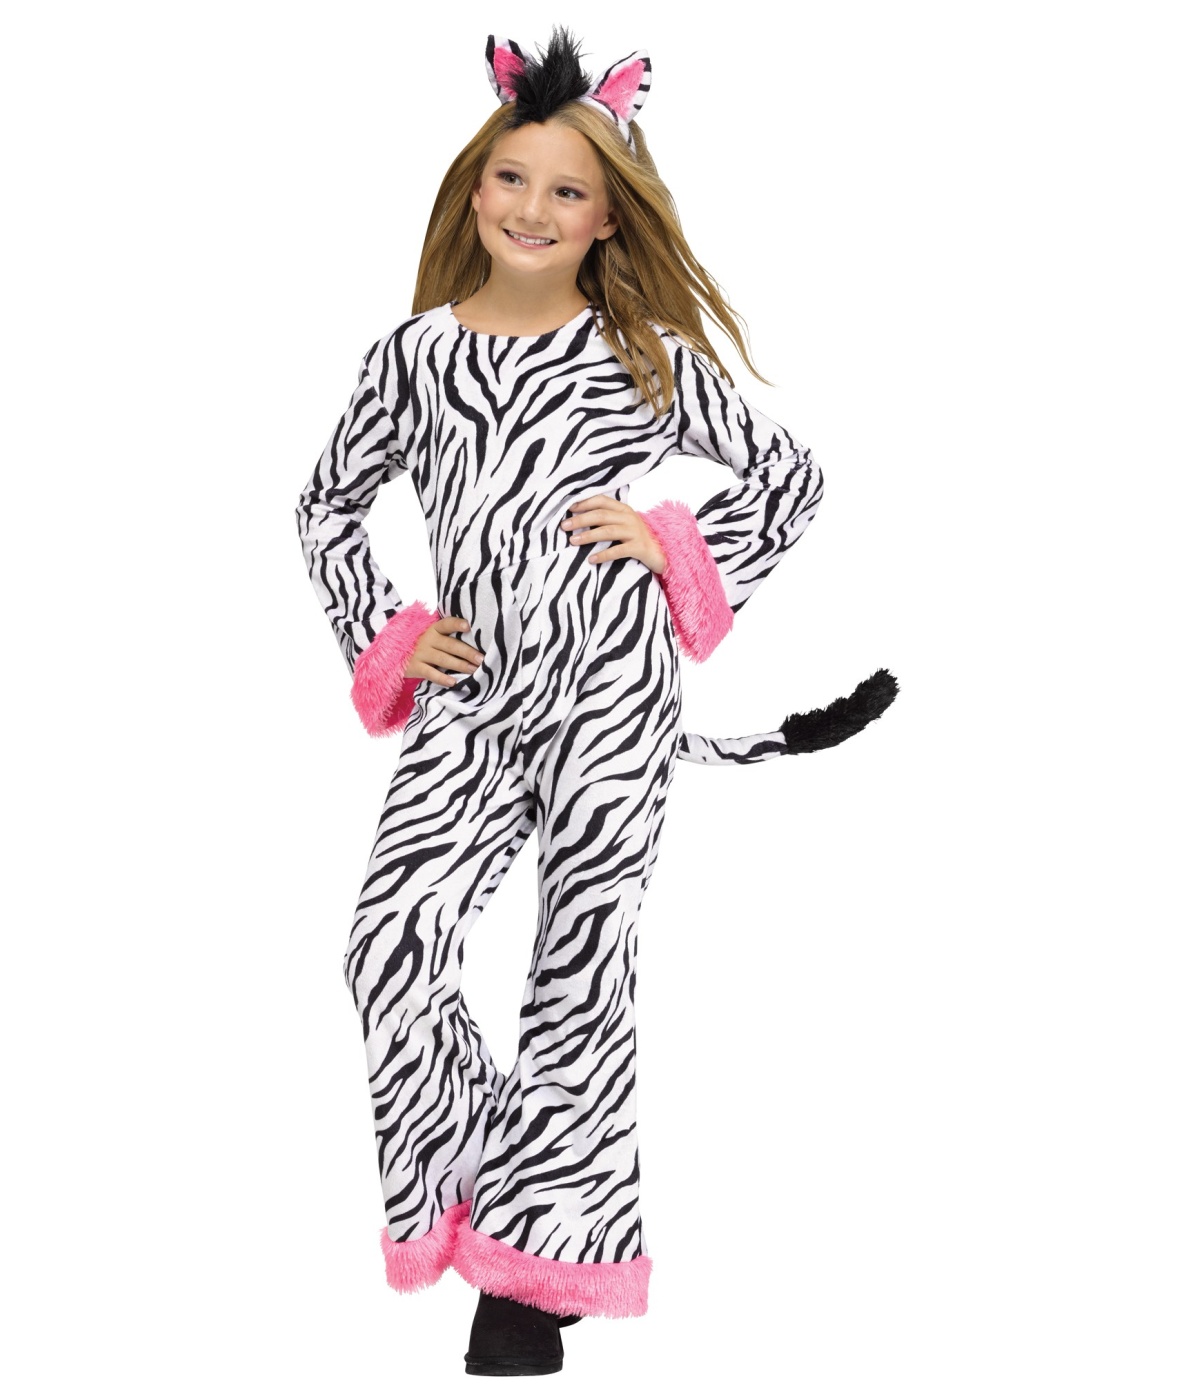  Girls Cool Stripes Zebra Costume